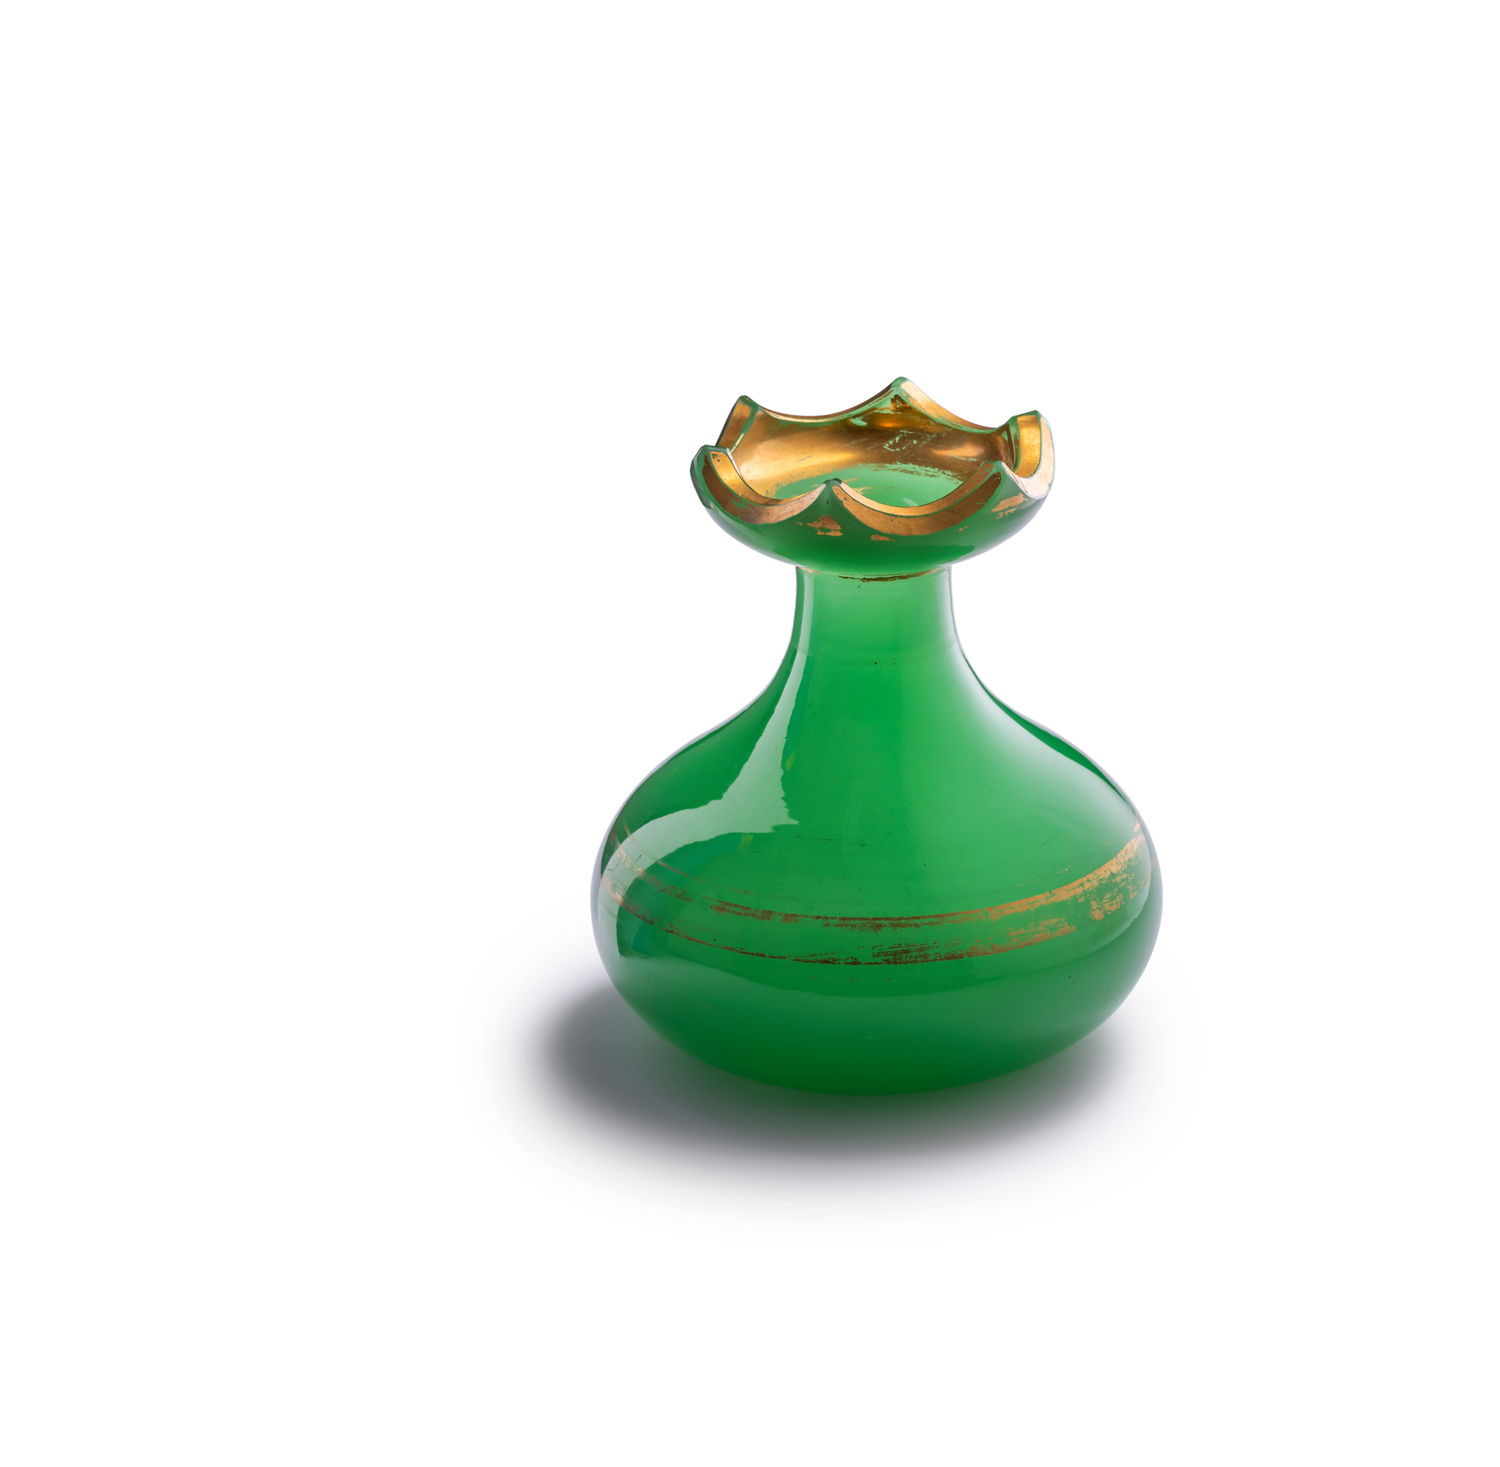 Green perfume bottle from the estate from Alexej von Jawlensky, before 1910, Museum Wiesbaden. Photo: Museum Wiesbaden ⁄ Bernd Fickert